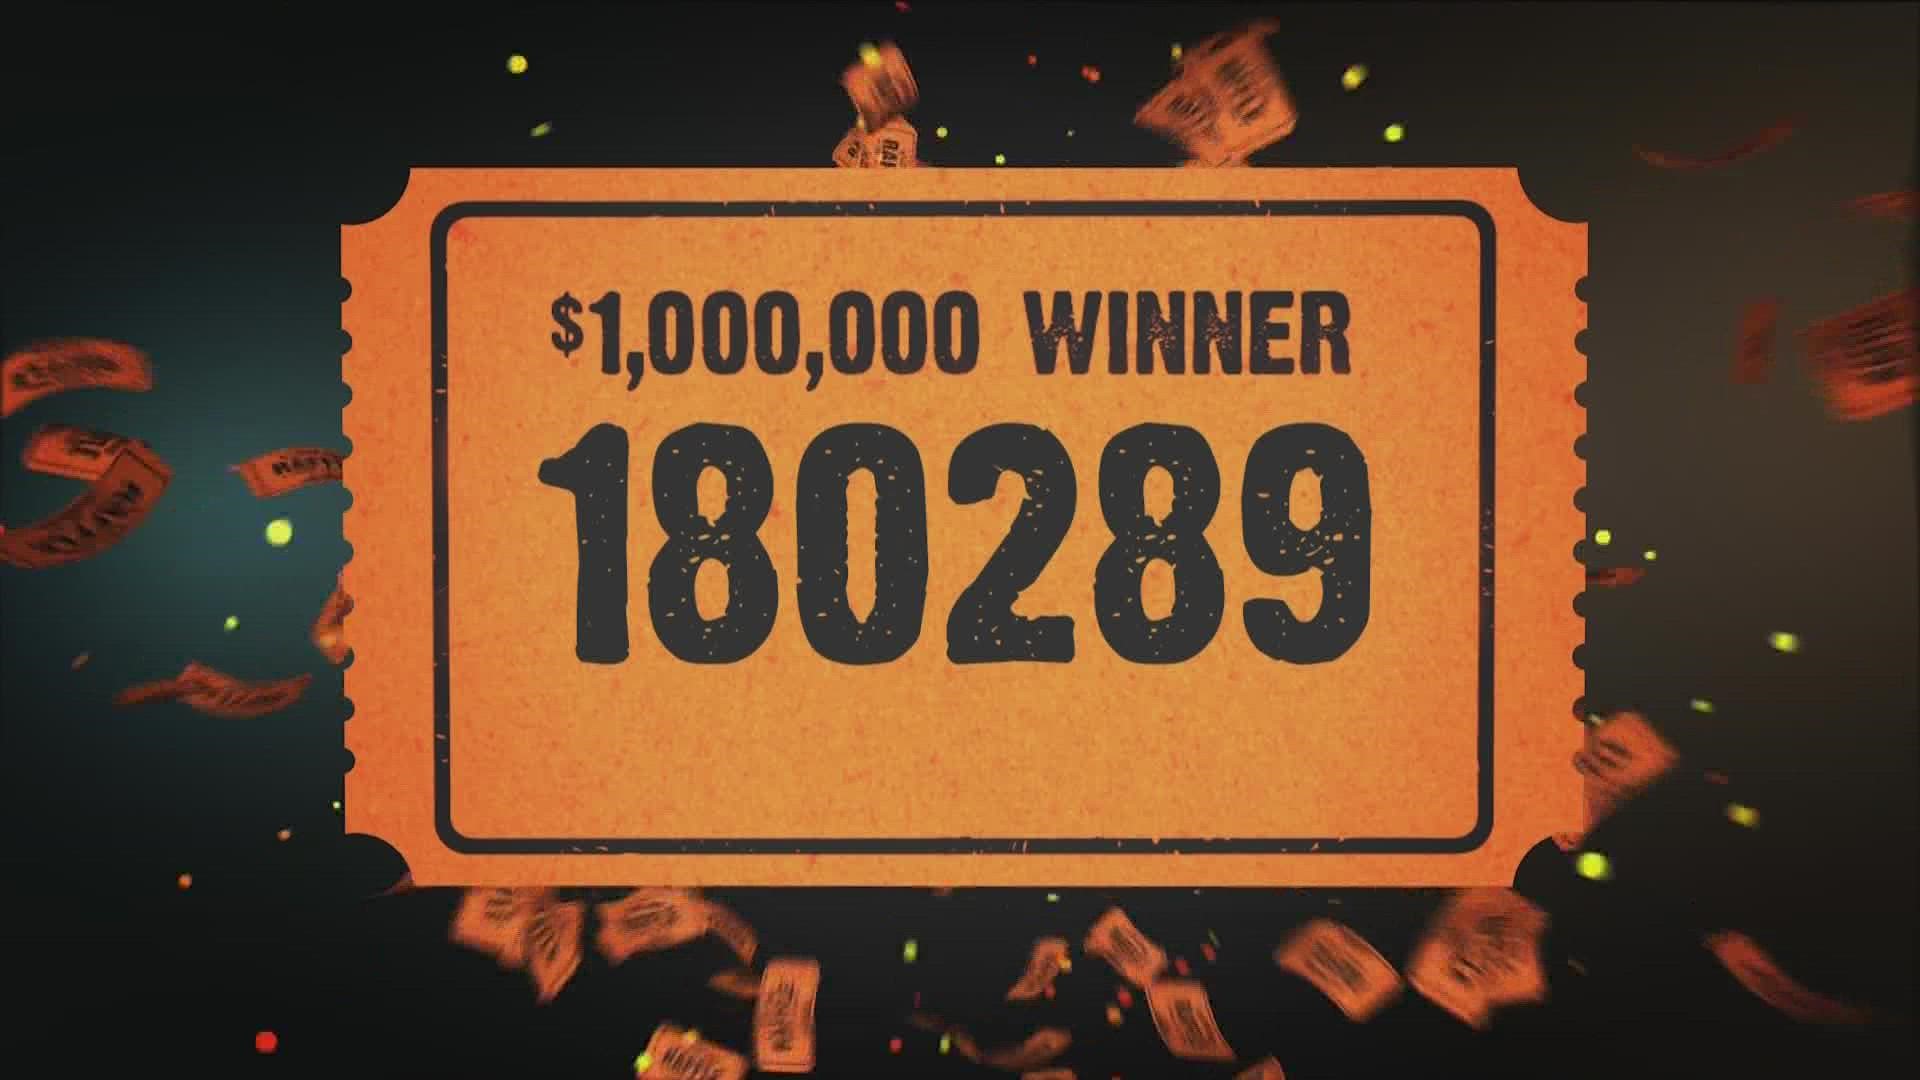 Idaho Lottery announces 1,000,000 Raffle winning numbers